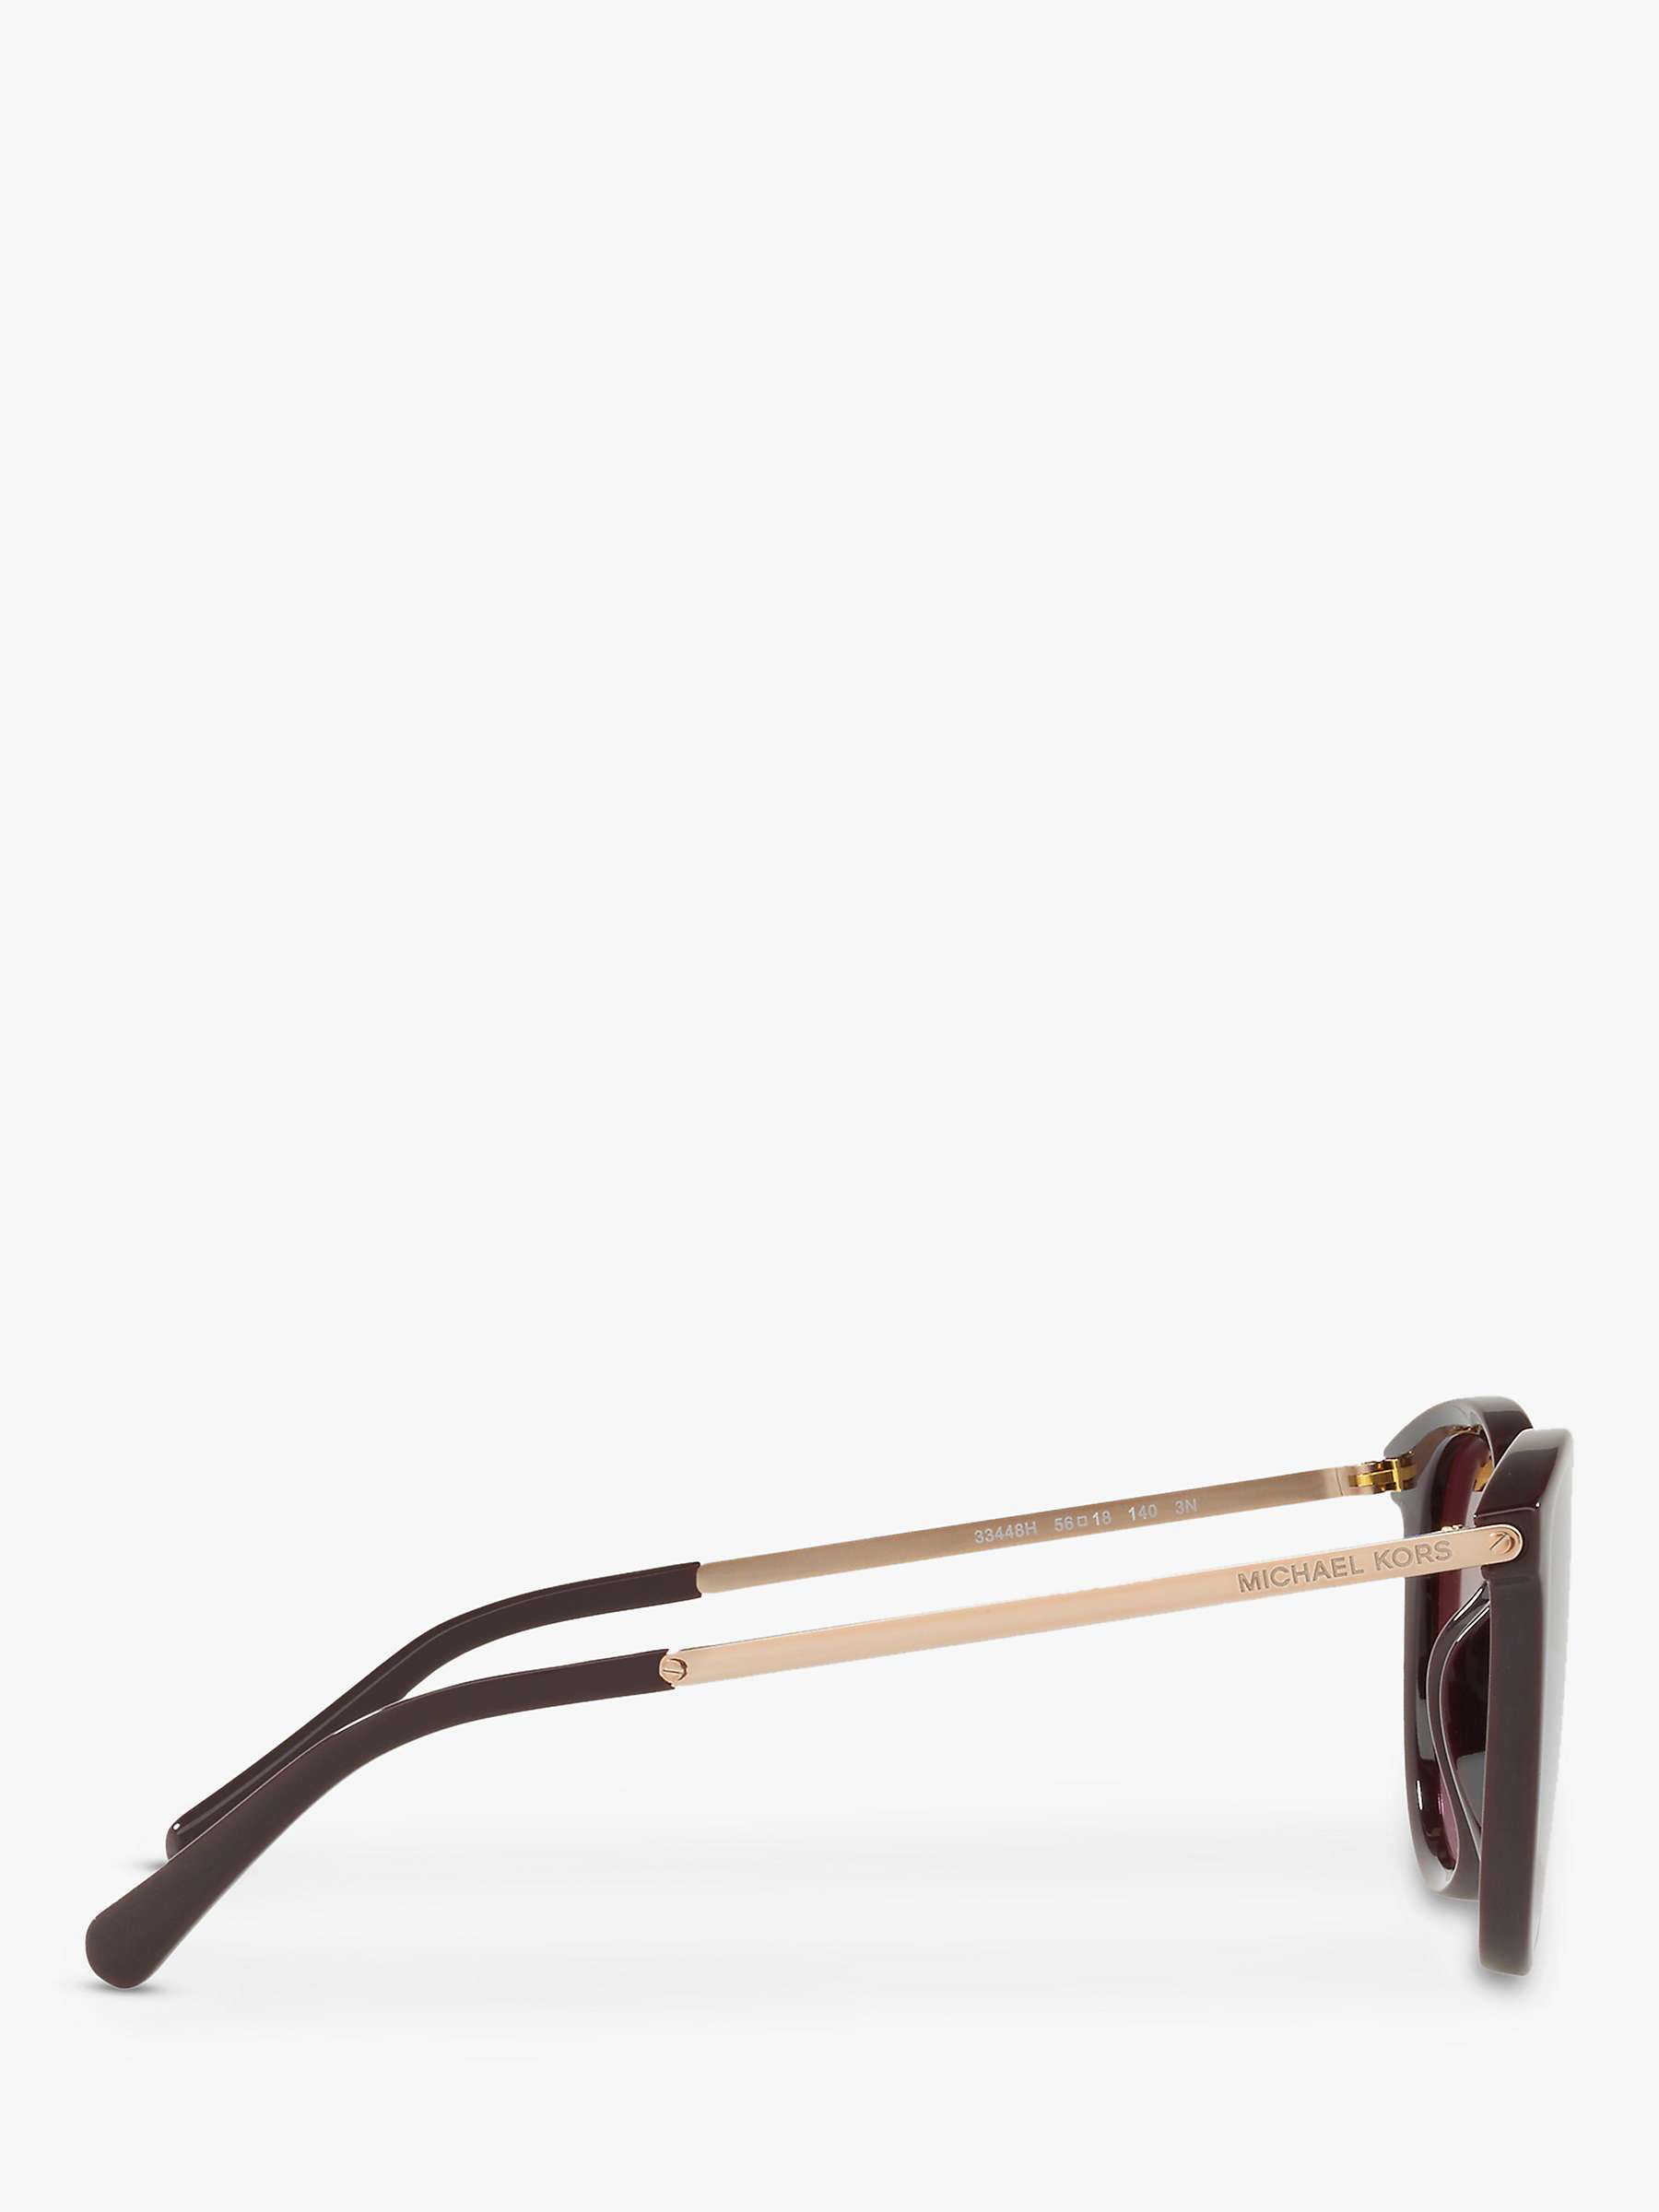 Buy Michael Kors MK2080U Women's Chamonix Oval Sunglasses, Purple/Purple Gradient Online at johnlewis.com